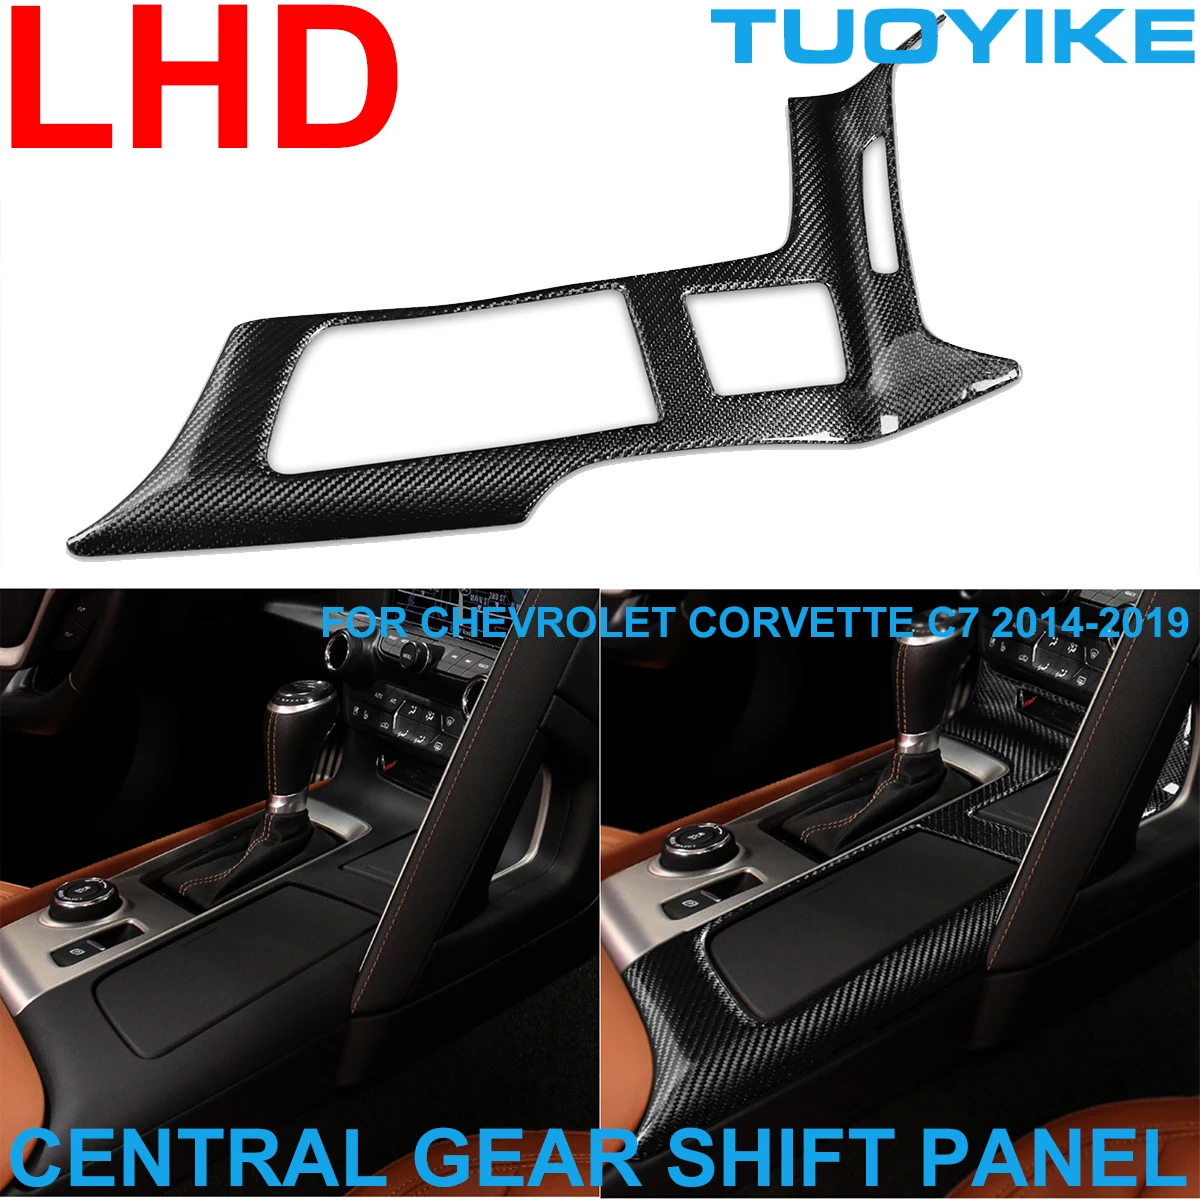 LHD Car Styling Real Carbon Fiber Central Gear Shift Panel Cover Trim Decorative Sticker For Chevrolet Corvette C7 2014-2019